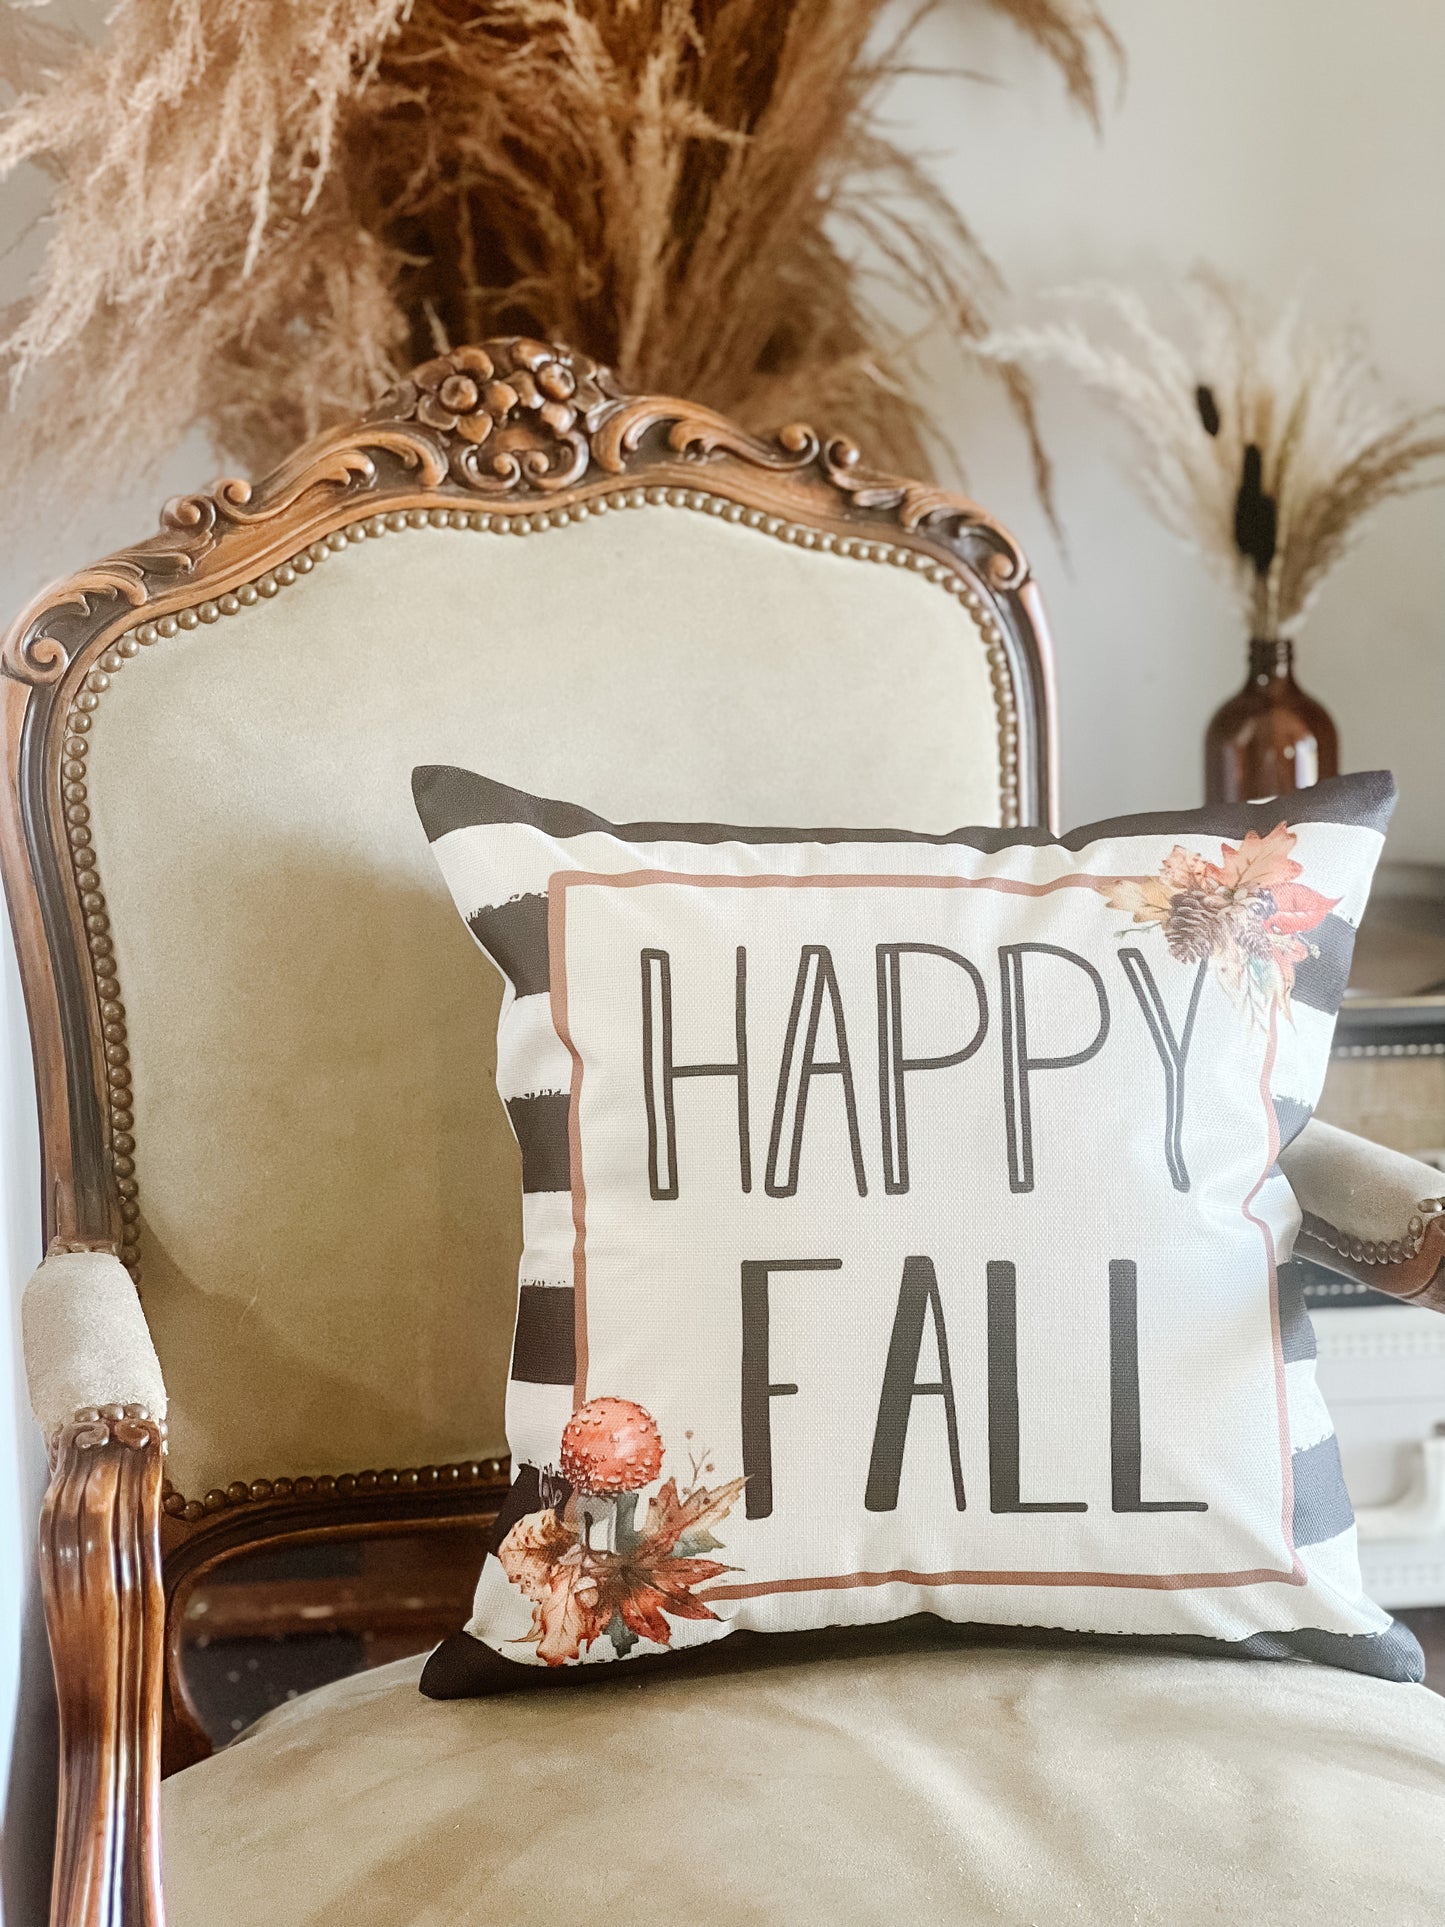 “Happy Fall” Pillow